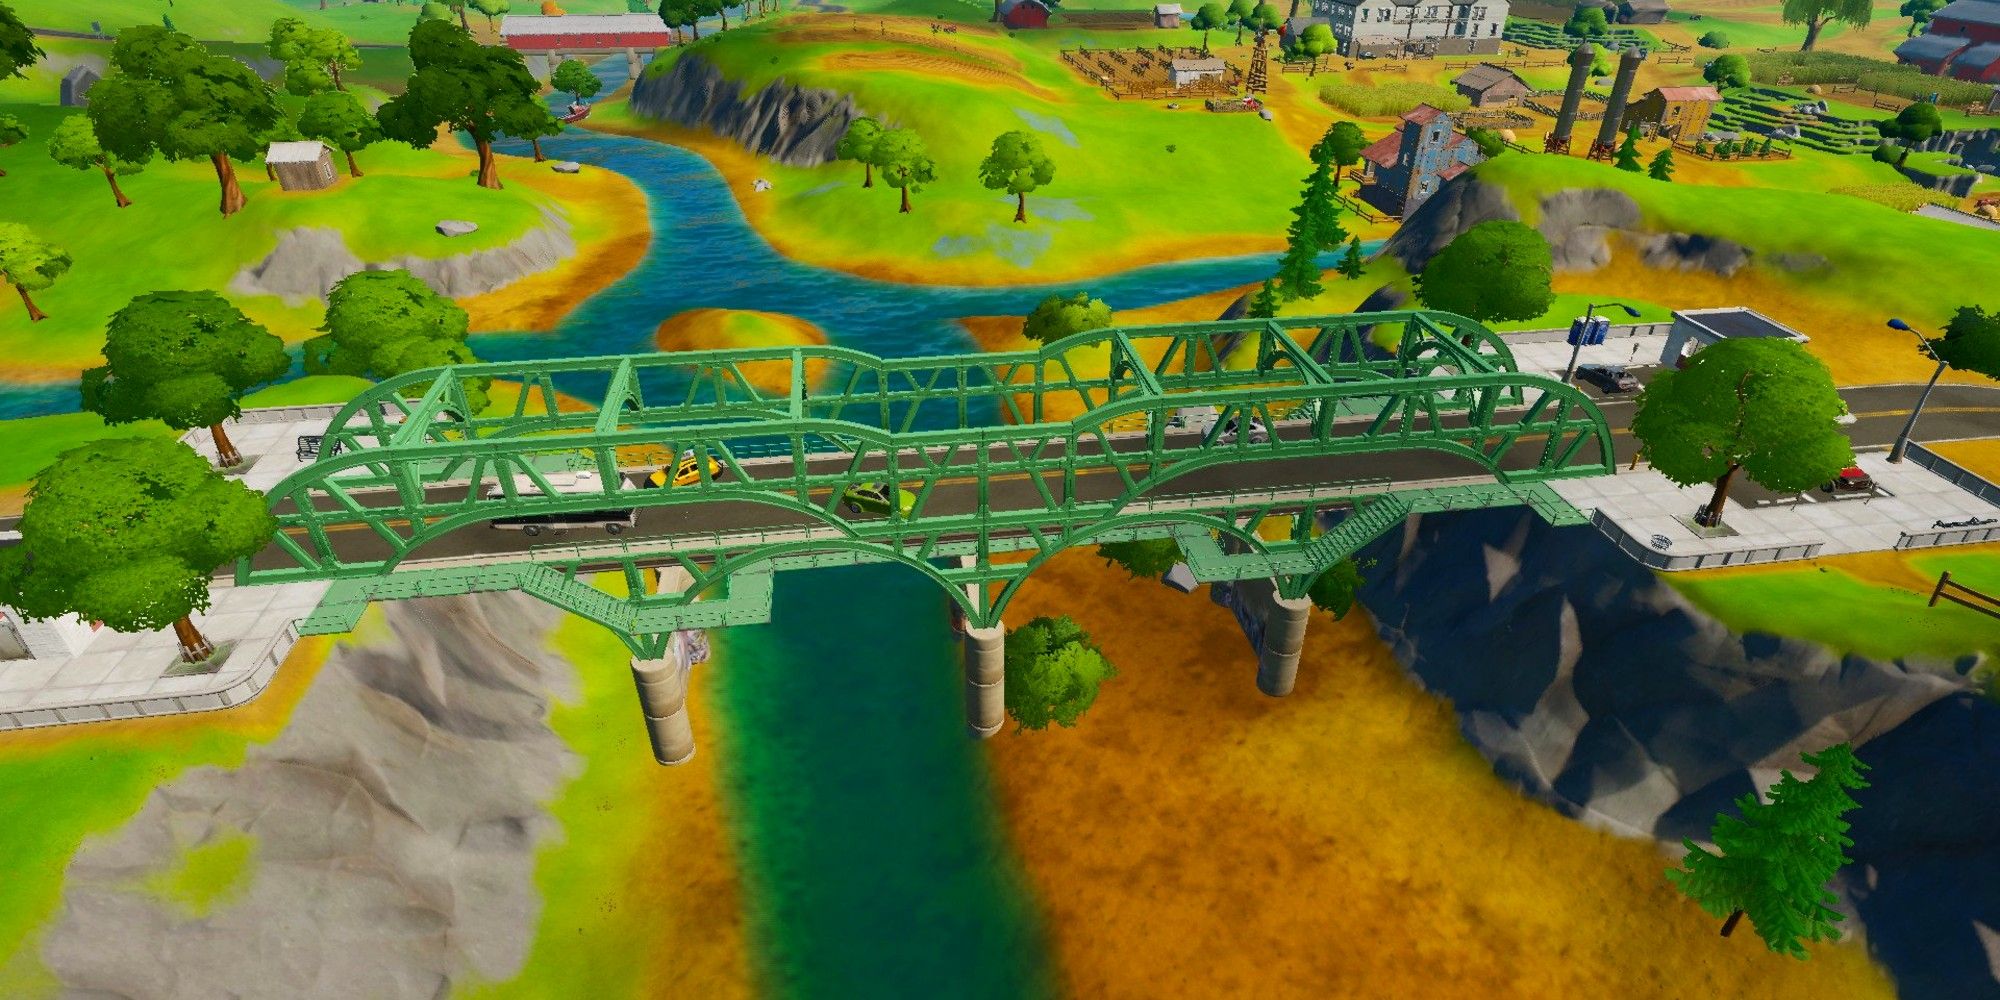 The green bridge over the river in Fortnite